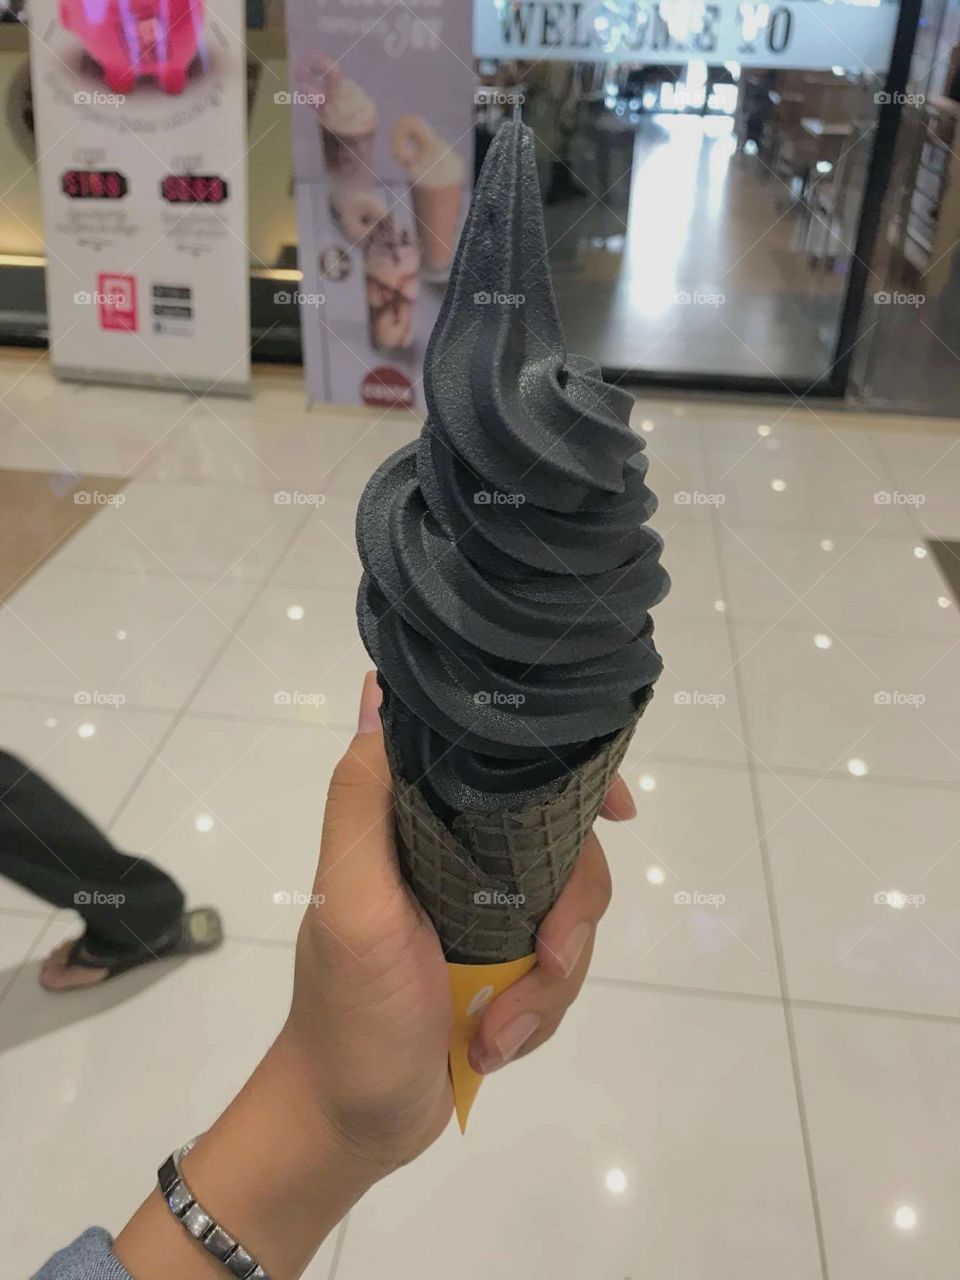 A black ice cream? 🤣